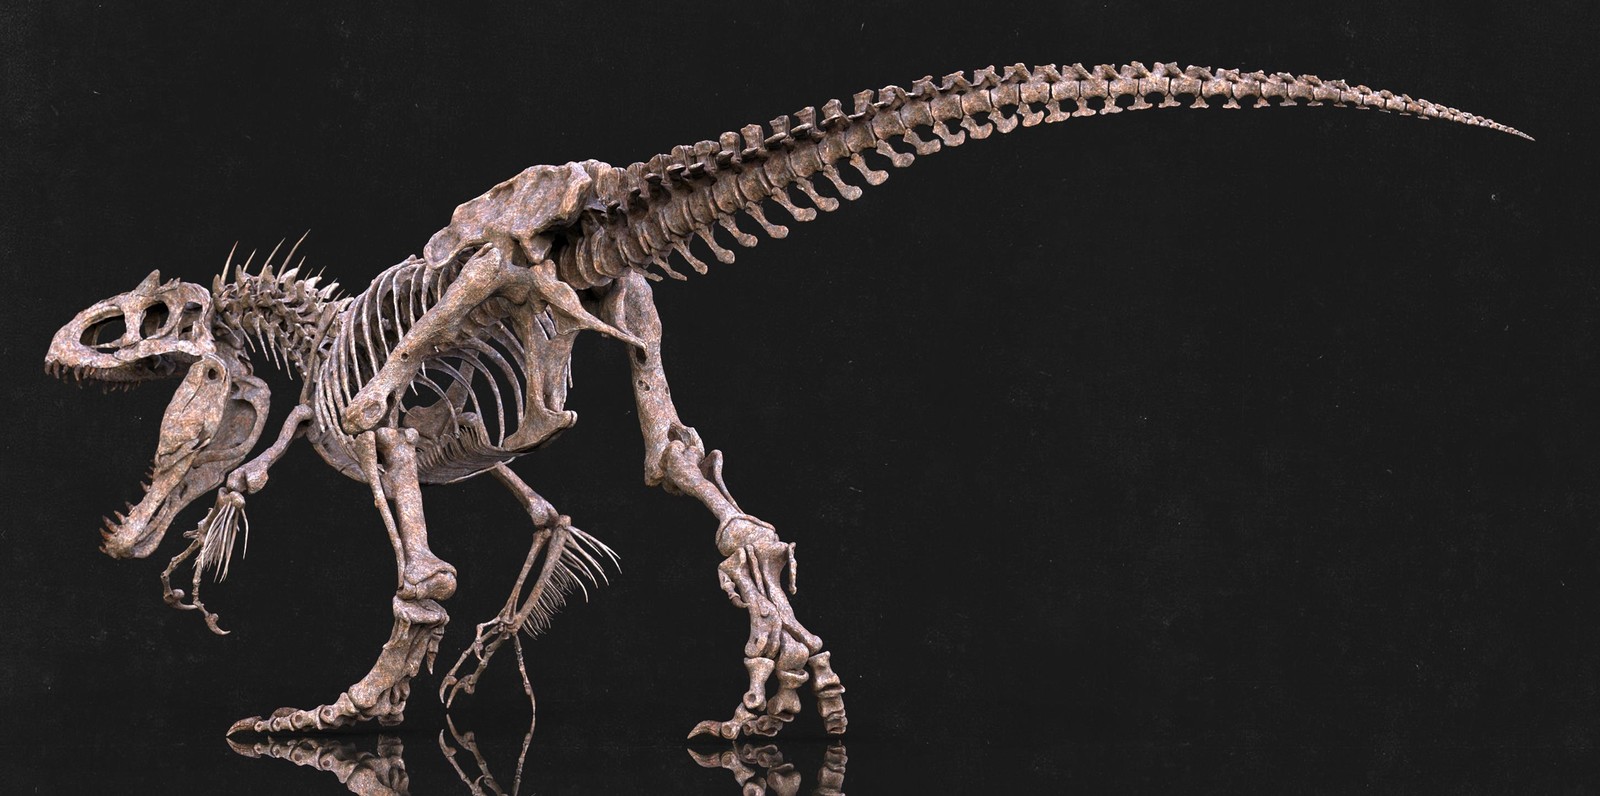 Vitamin Imagination - Indominus rex Skeleton by. VI models